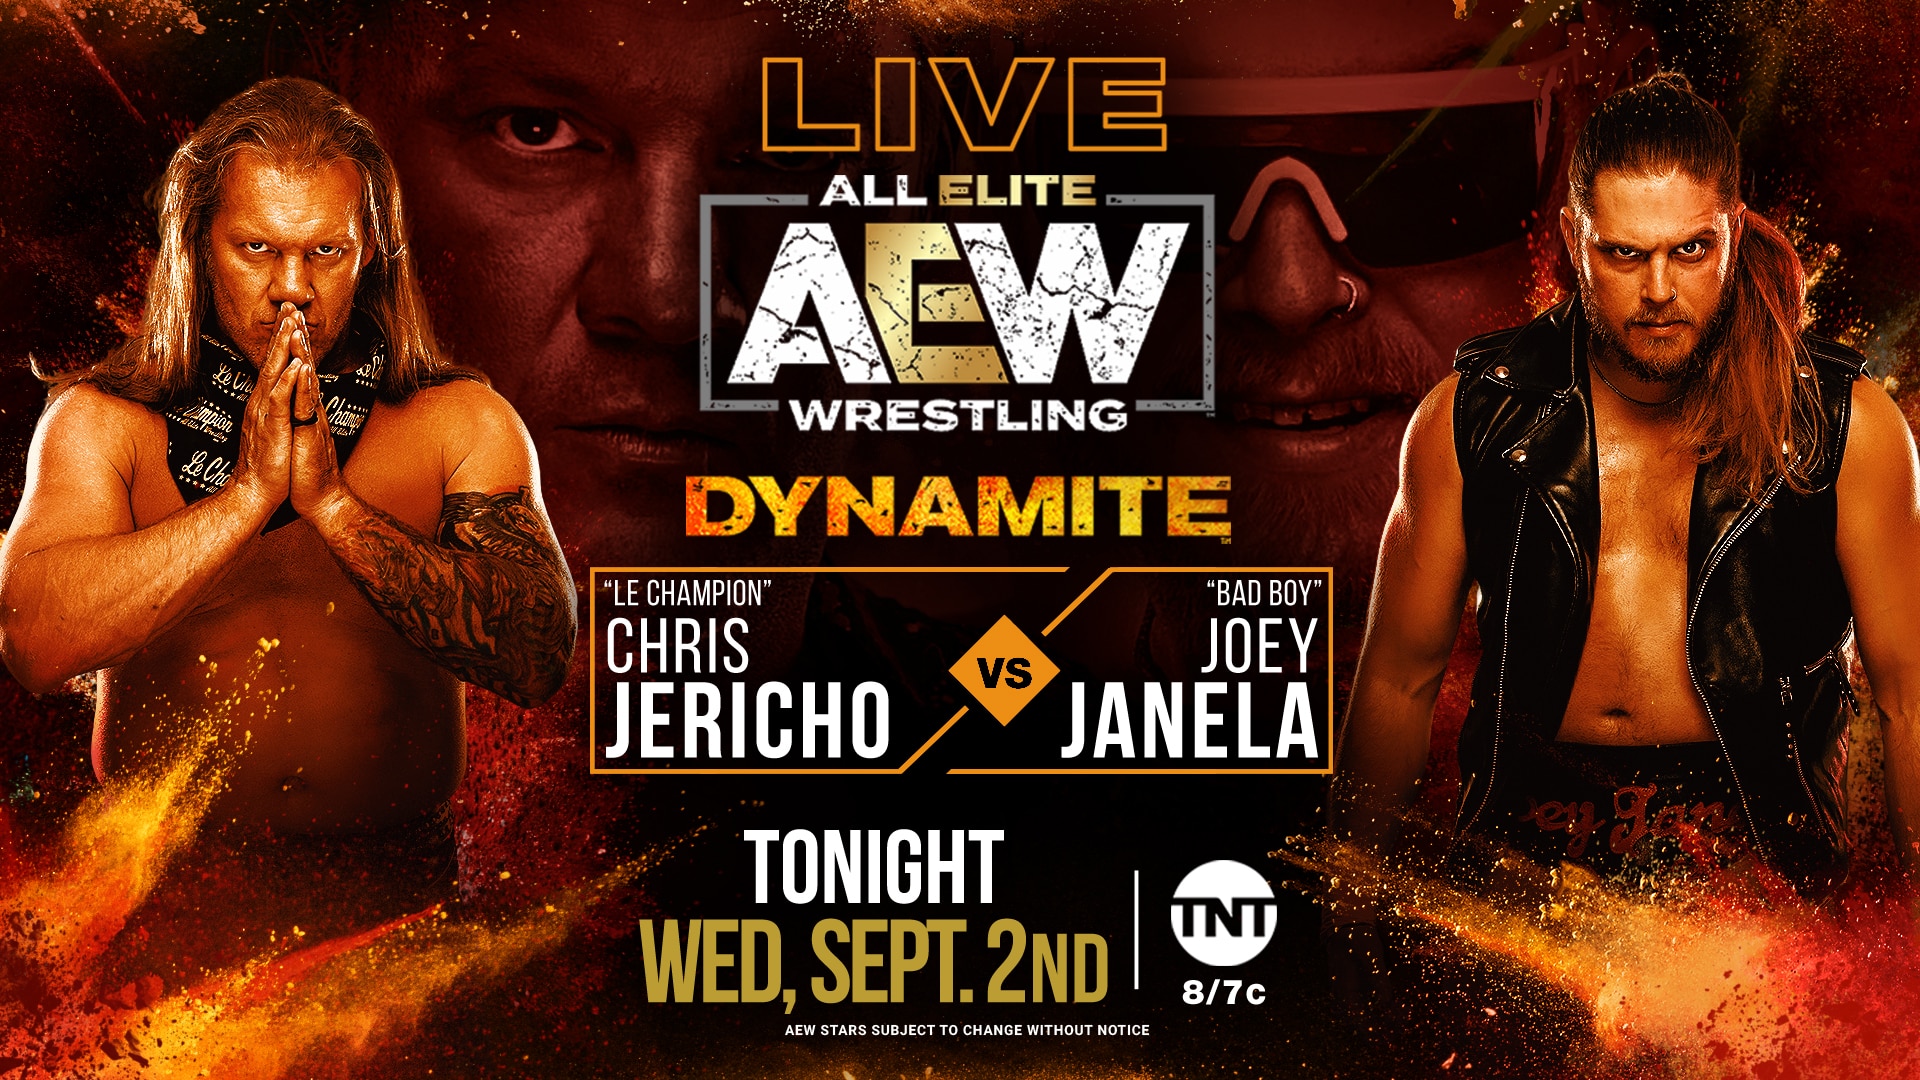  Jericho vs Janela